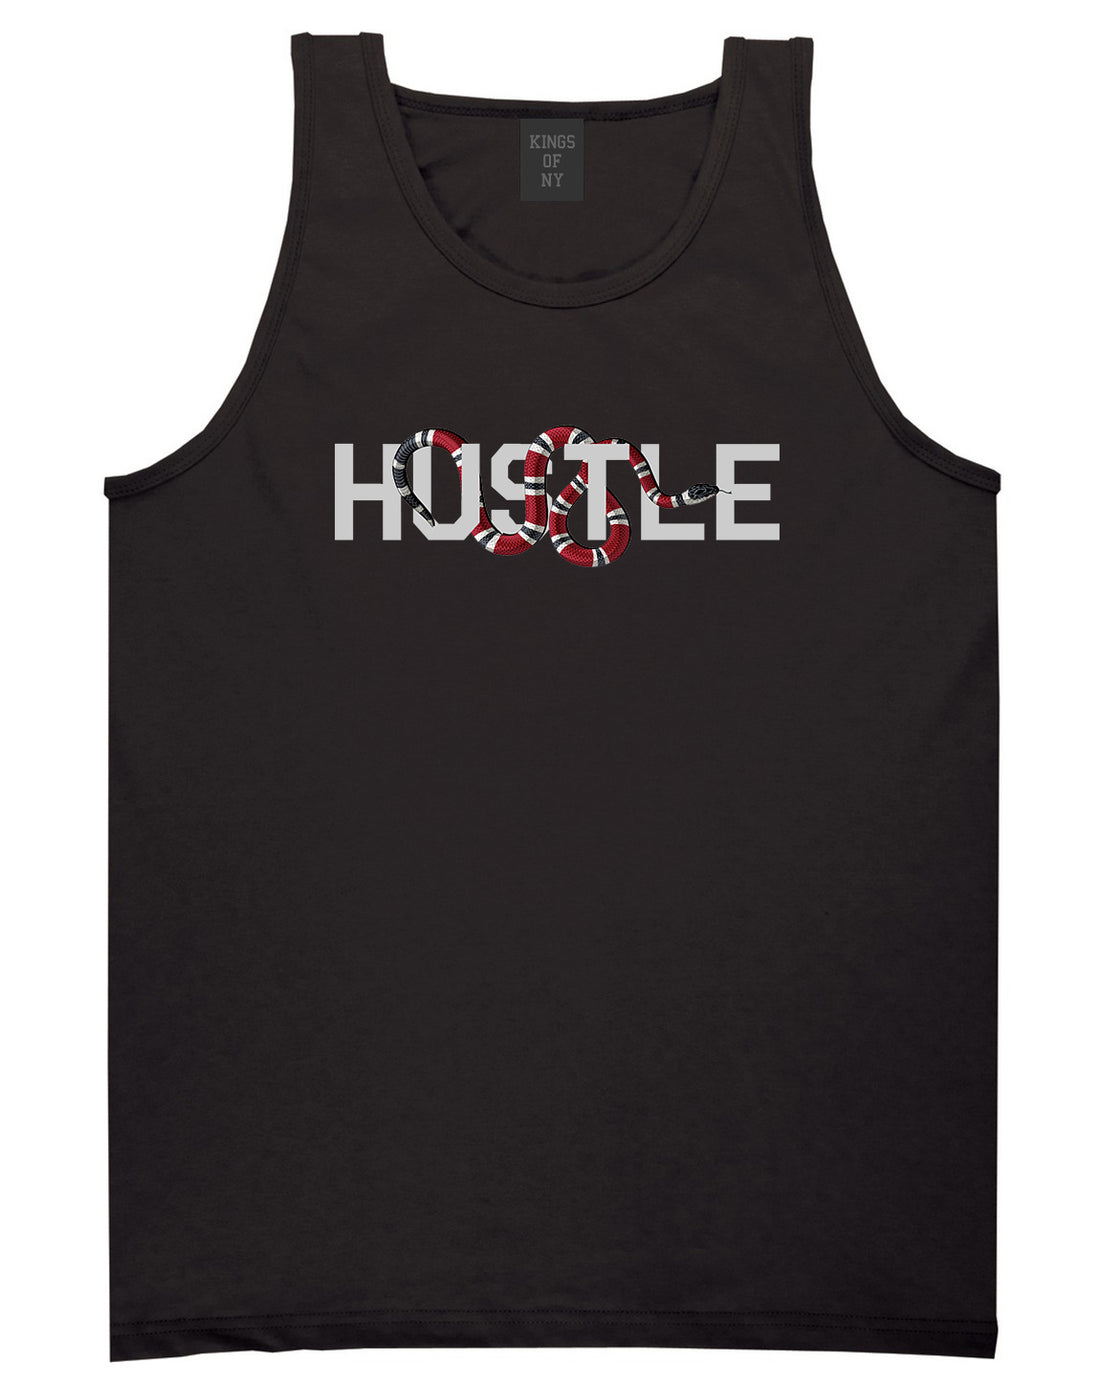 Hustle Snake Mens Tank Top Shirt Black by Kings Of NY